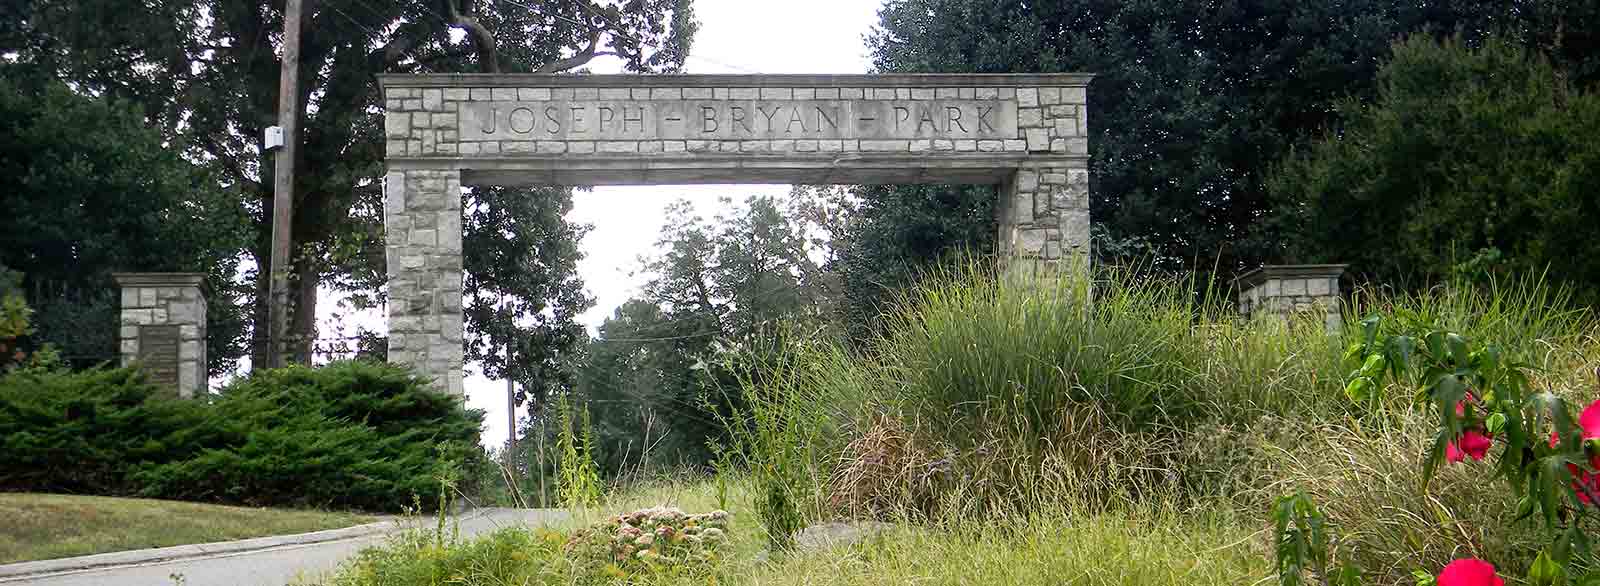 the entrance to joseph bryan park